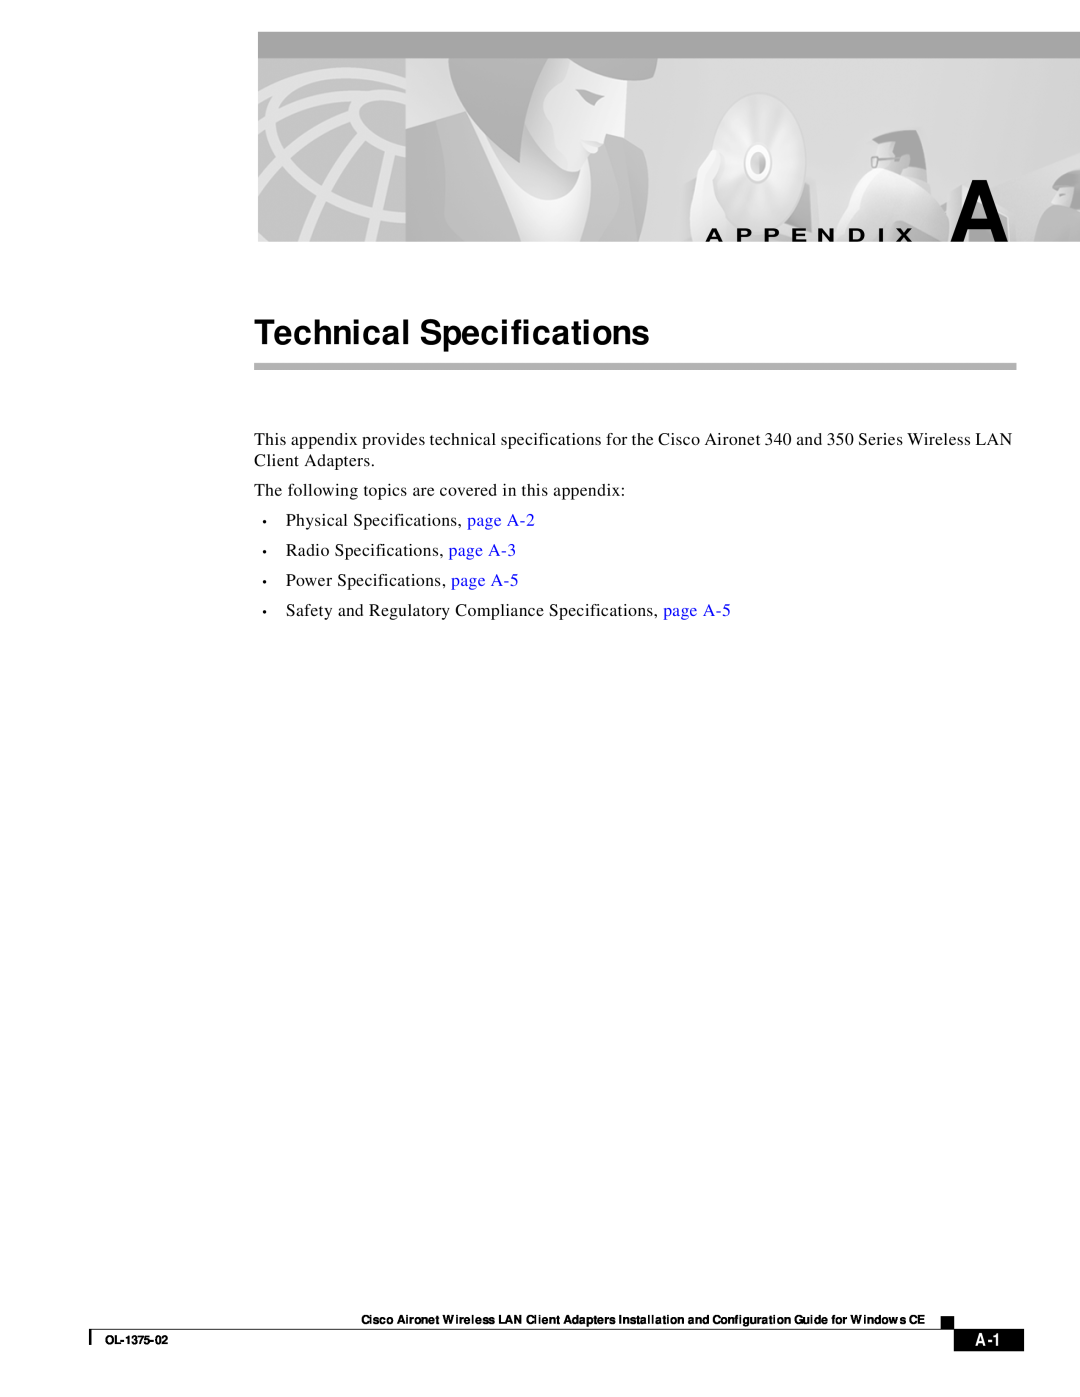 Cisco Systems 340, 350 appendix Technical Specifications, A P P E N D I X A 